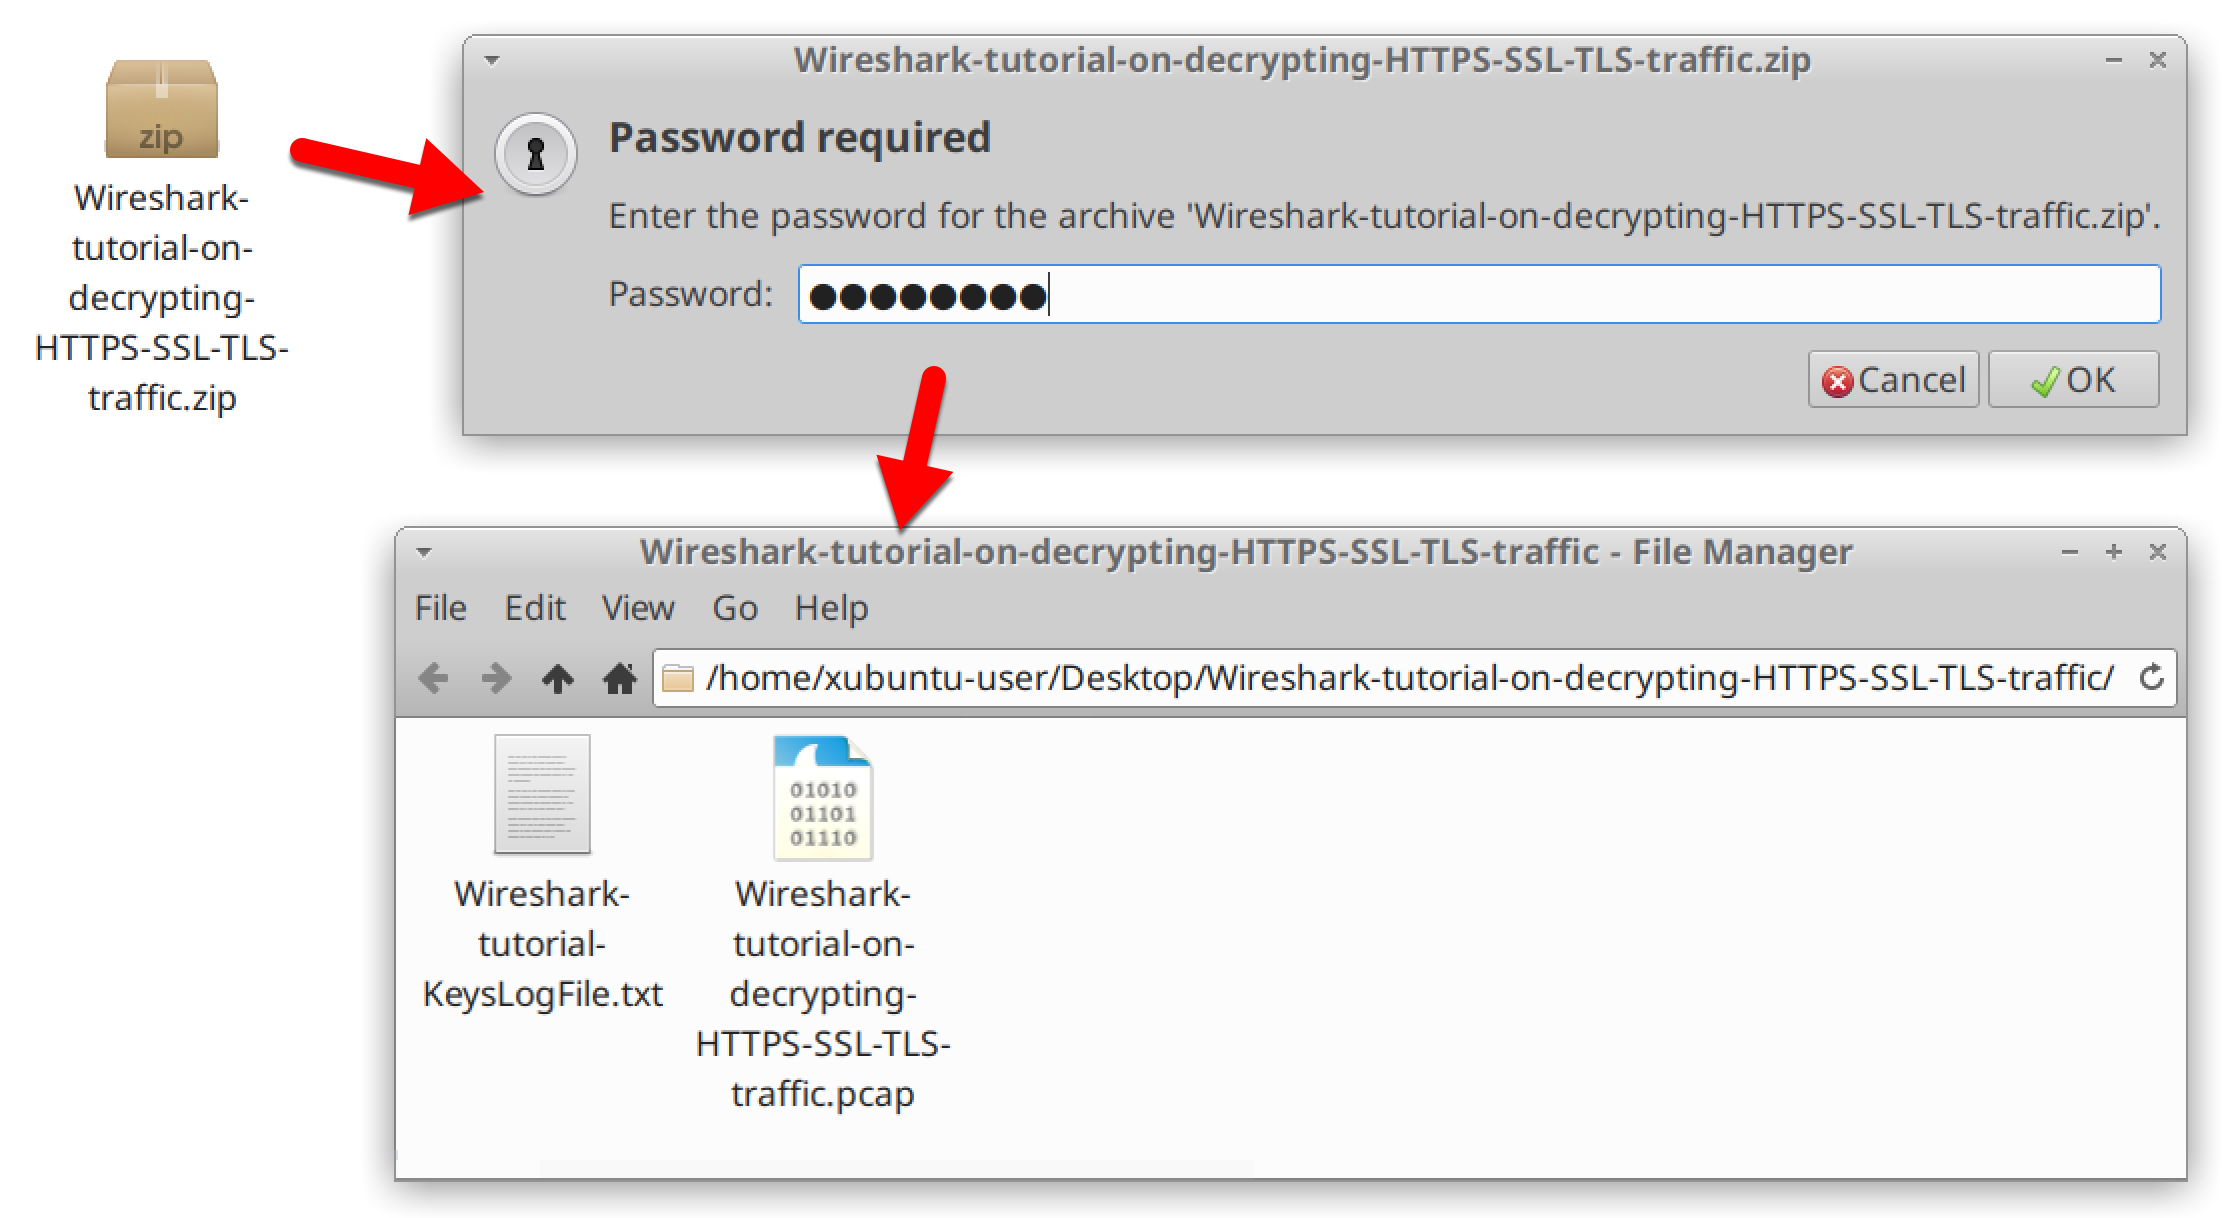 Wireshark-tutorial-on-decrypting-HTTPS-SSL-TLS-traffic.zip - These screenshots show how to unzip the ZIP archive used for this tutorial on decrypting HTTPS traffic. 